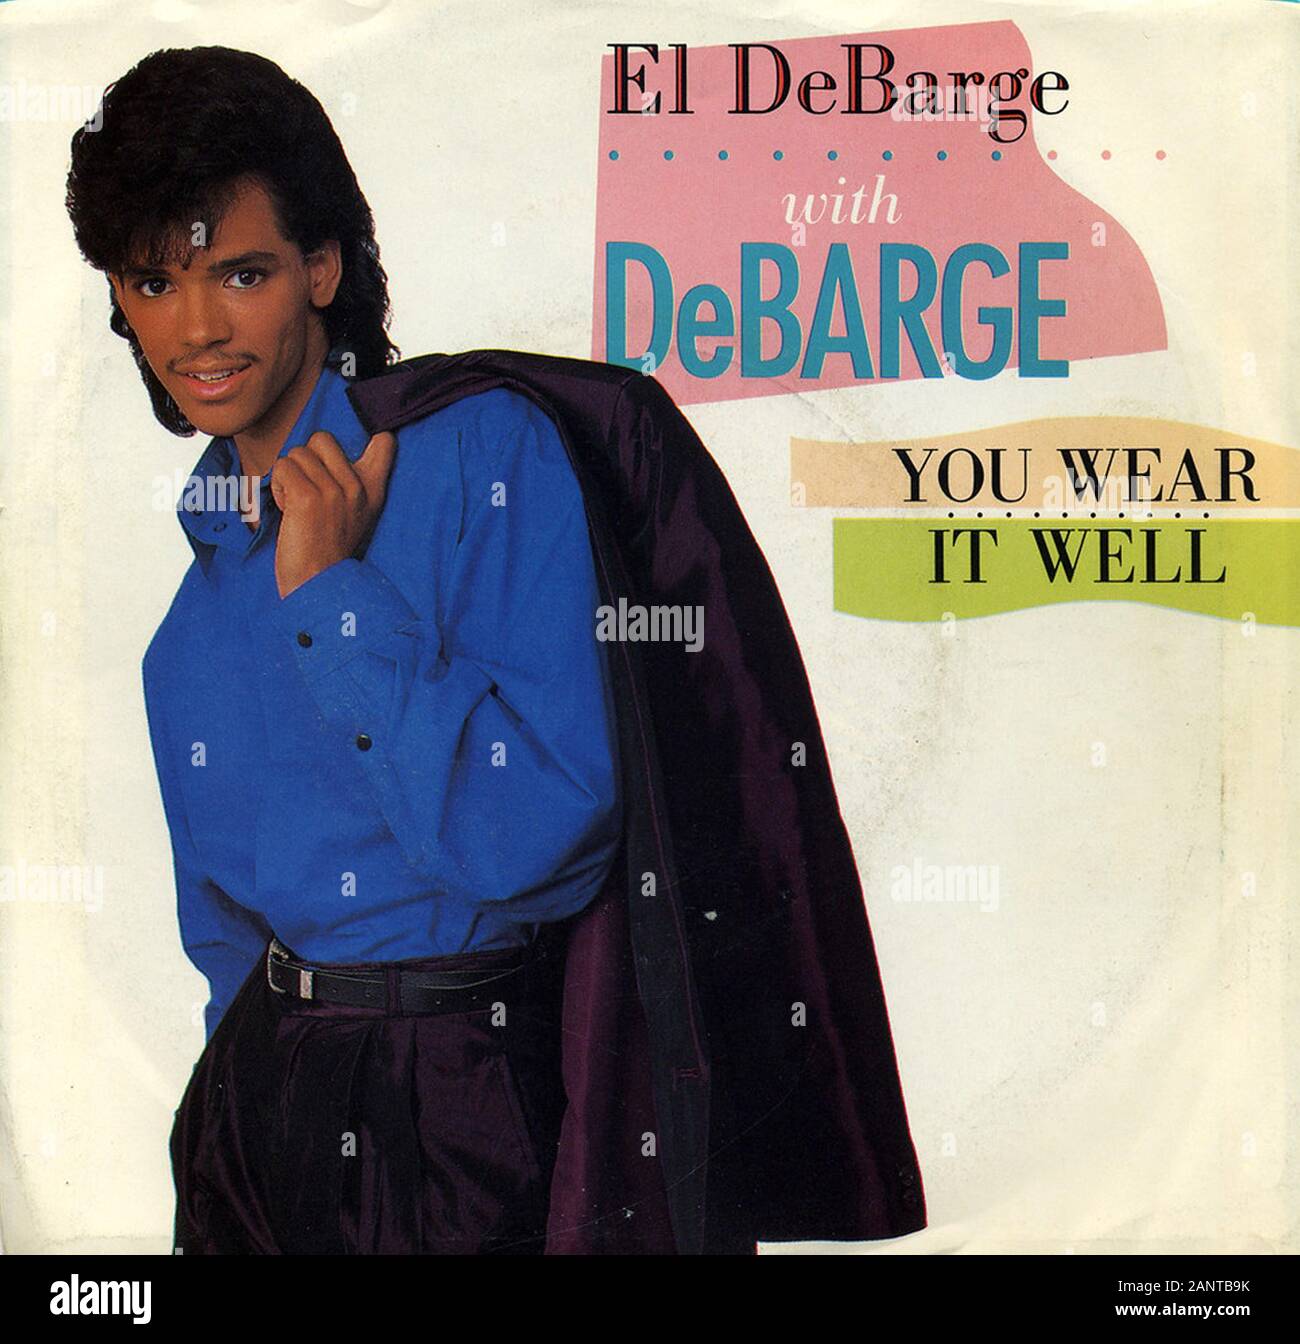 El DeBarge with DeBarge - You Wear It Well - Classic vintage vinyl album Stock Photo